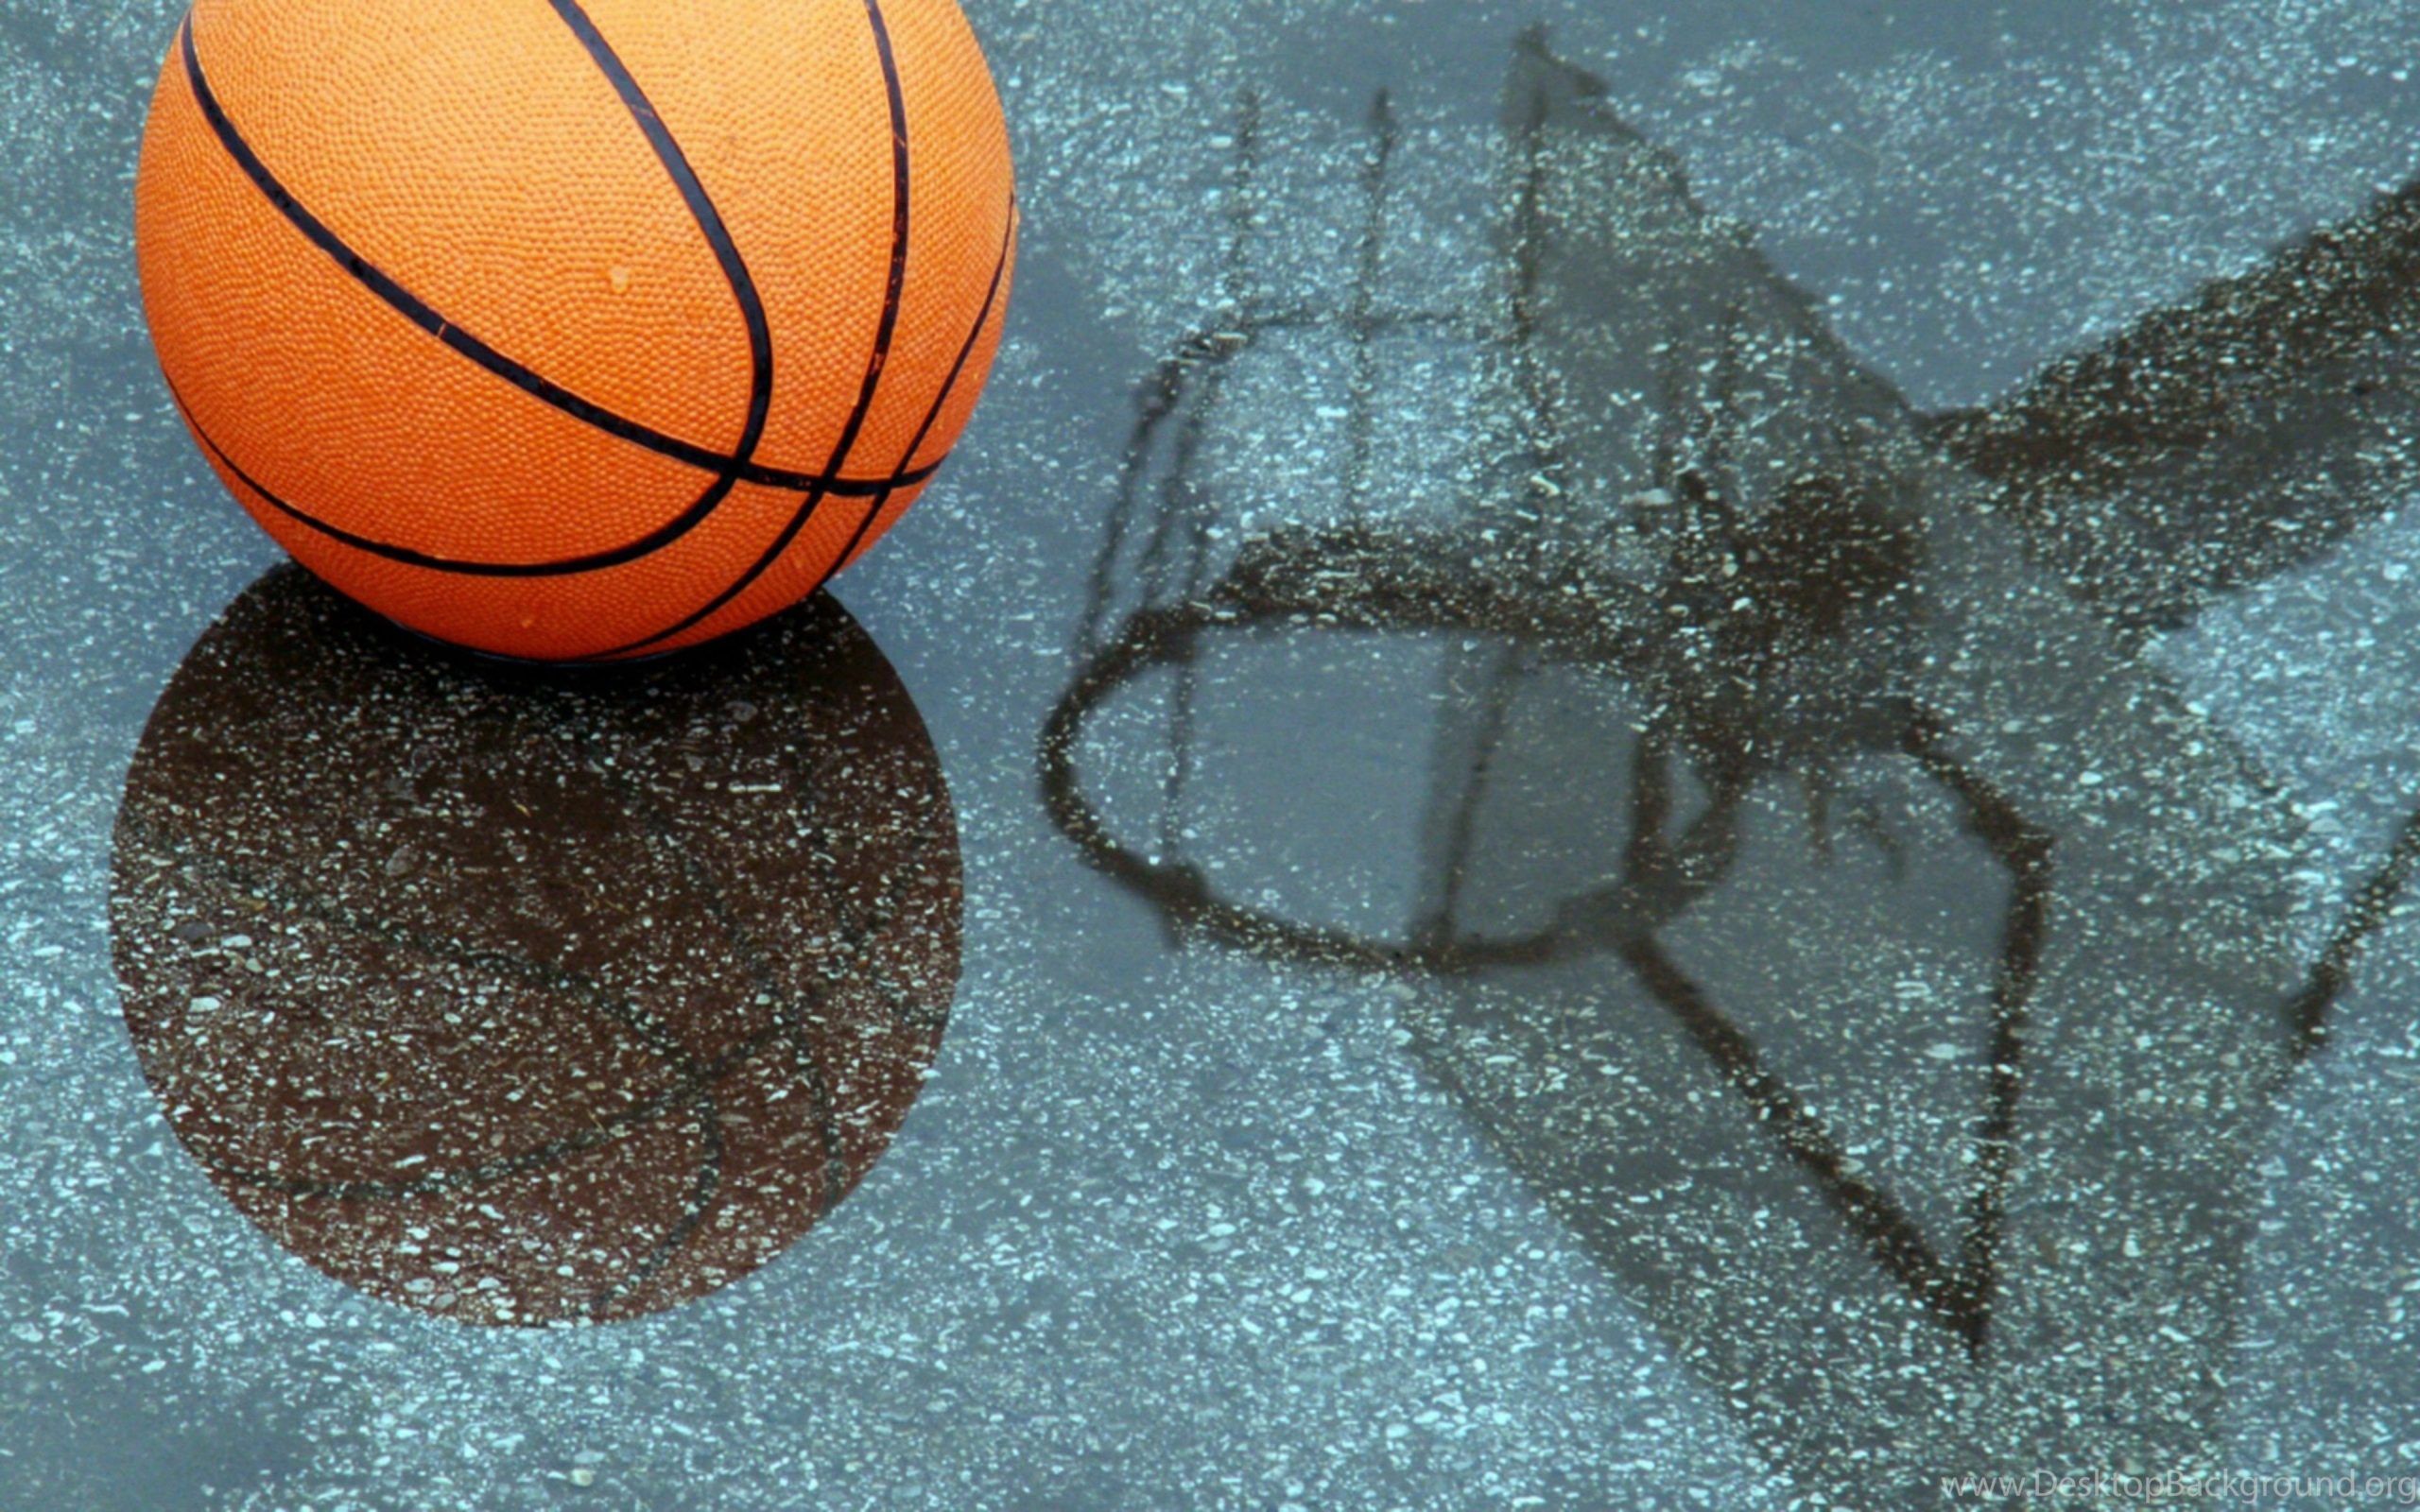 A basketball and ball are on the ground - Basketball